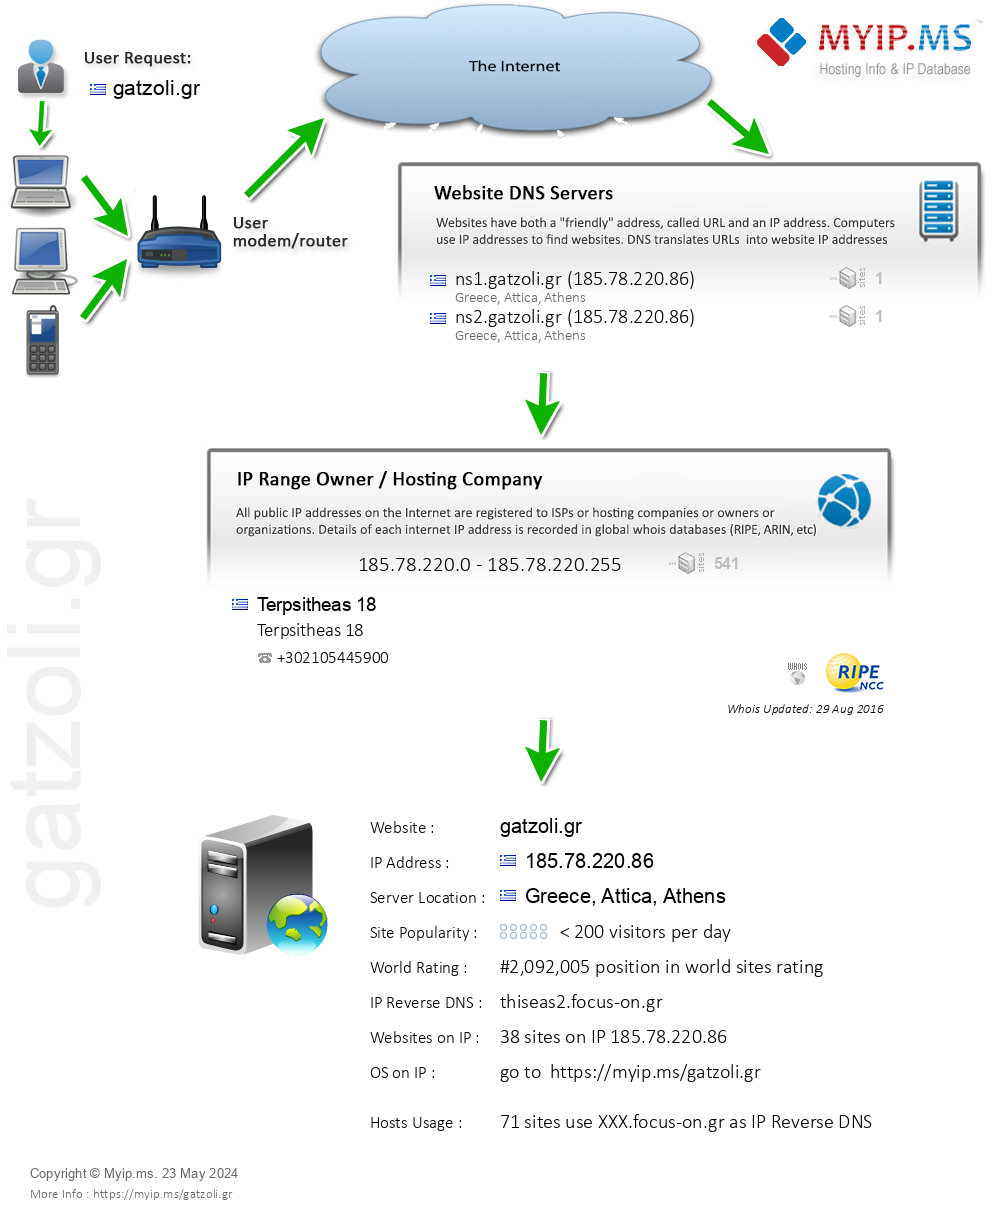 Gatzoli.gr - Website Hosting Visual IP Diagram